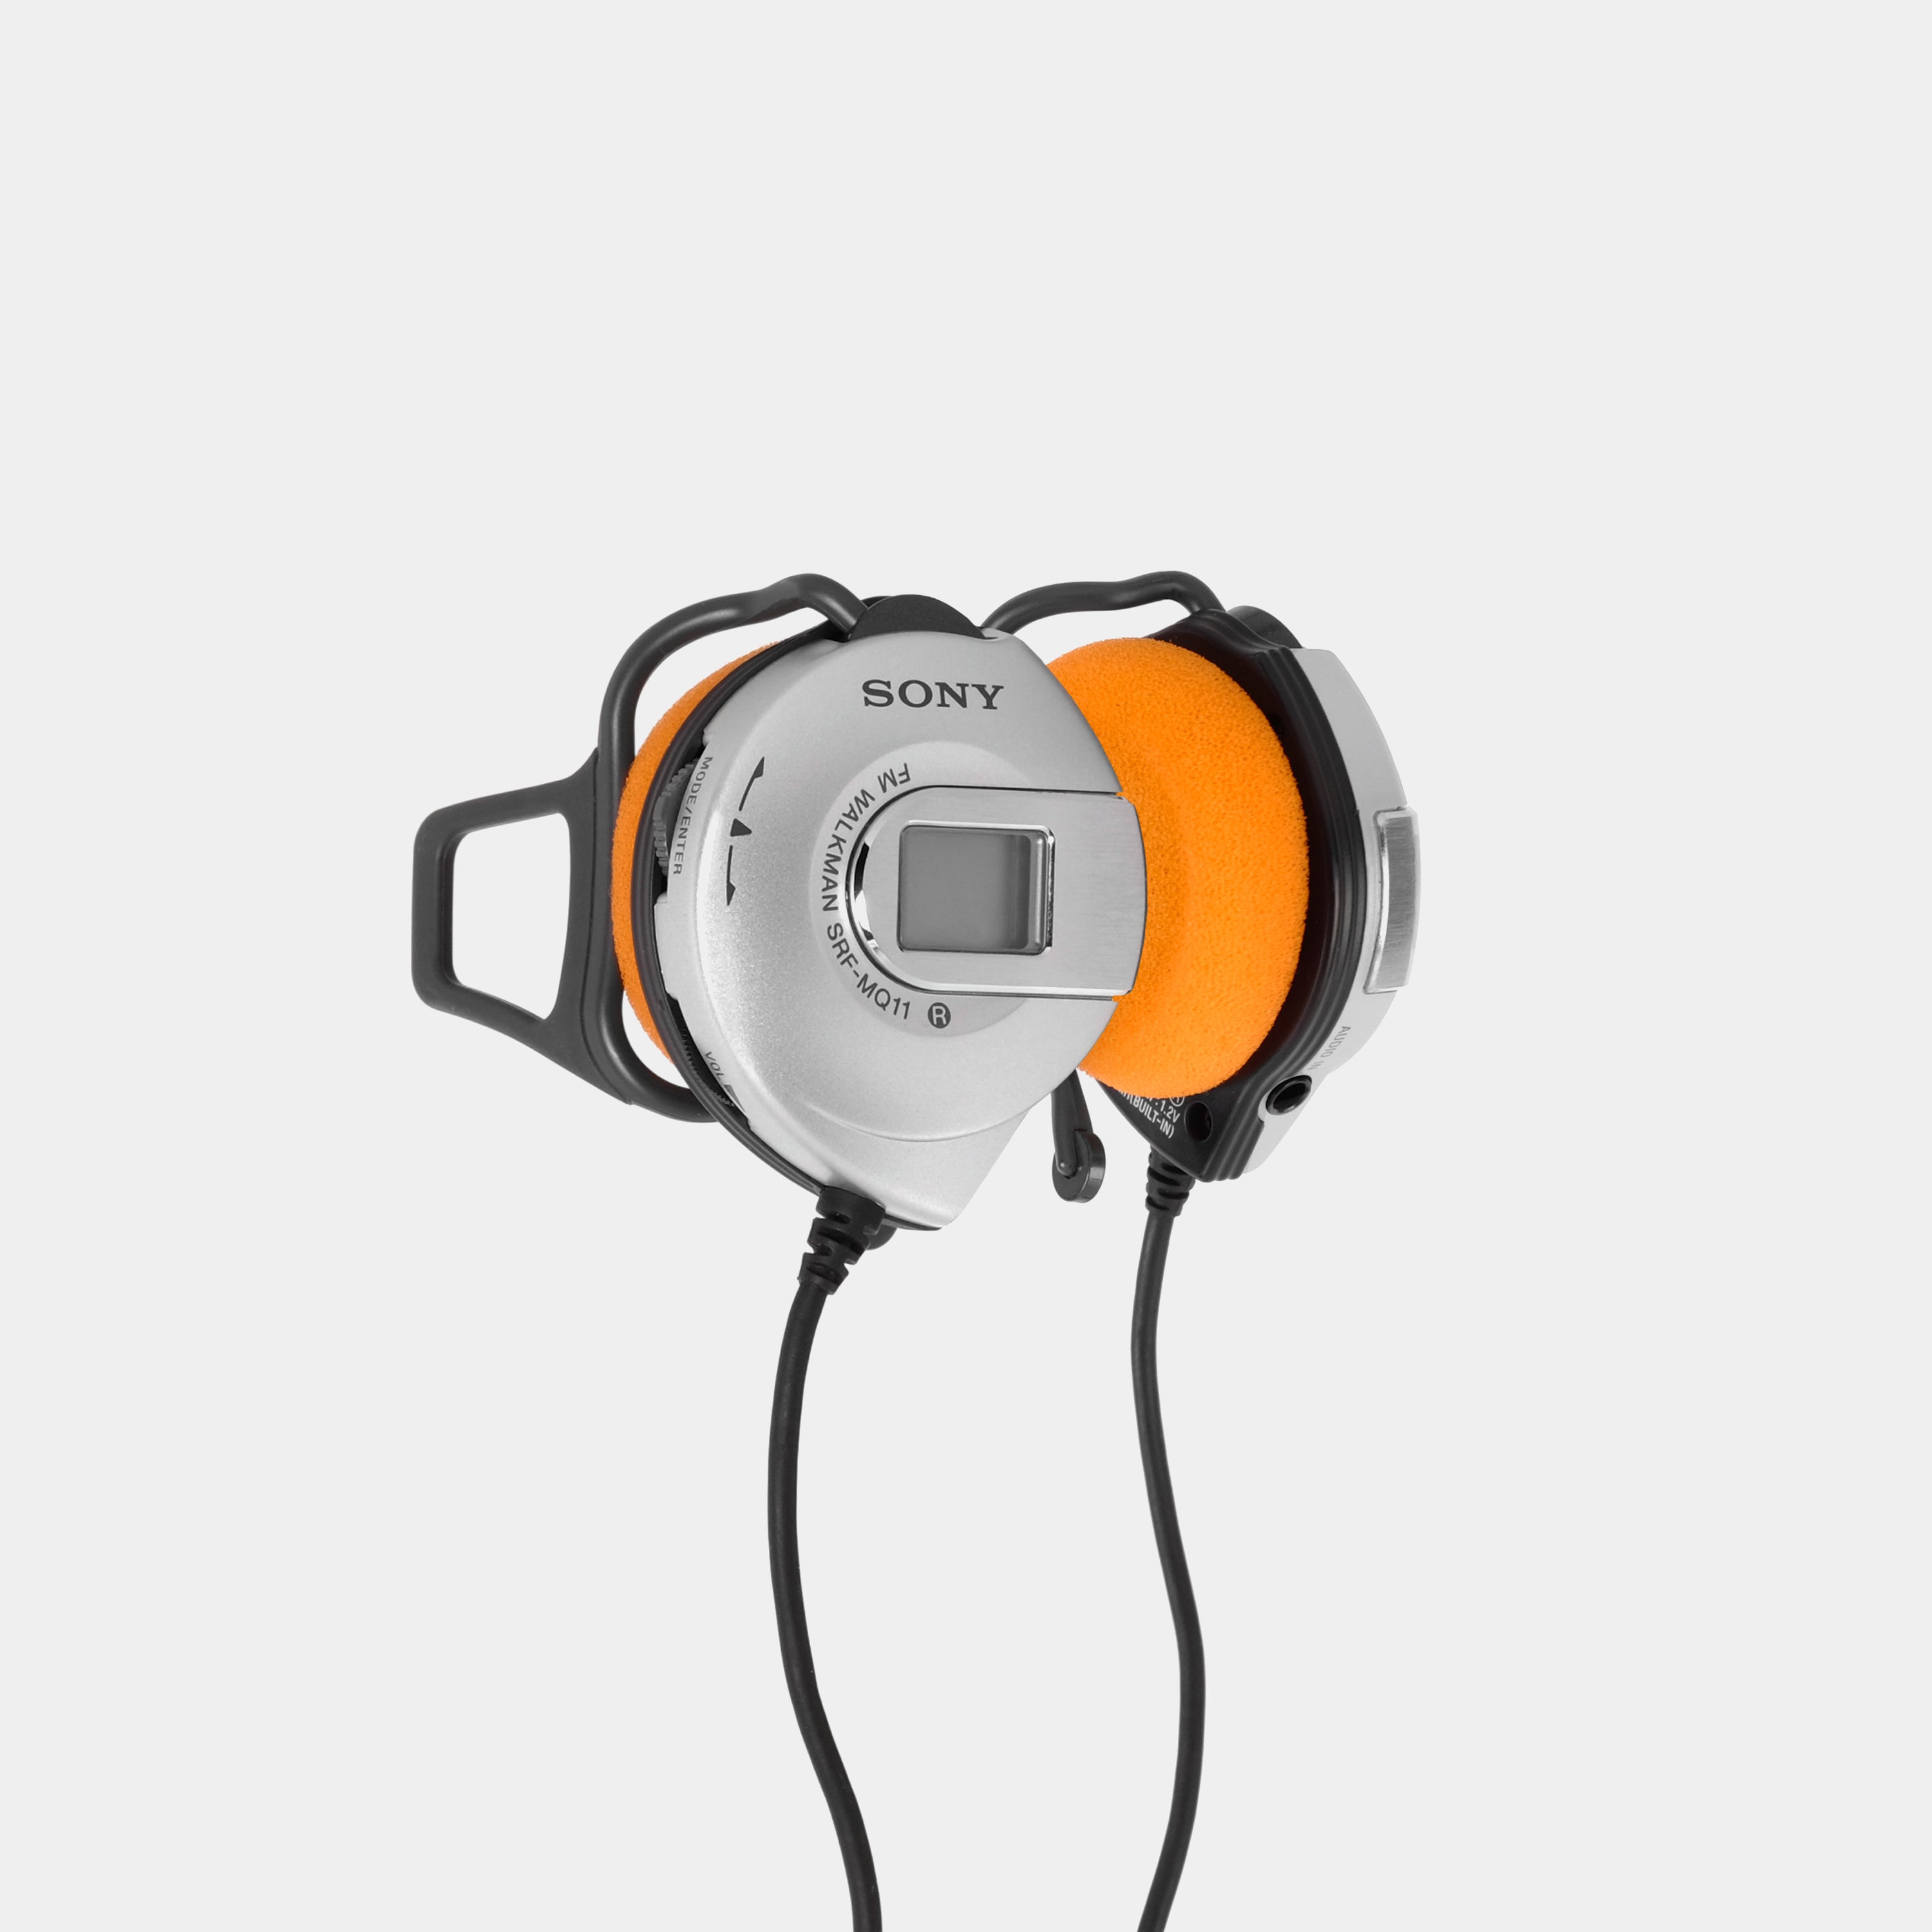 Sony SRF-MQ11 Ear Clip FM Radio Walkman Headphones